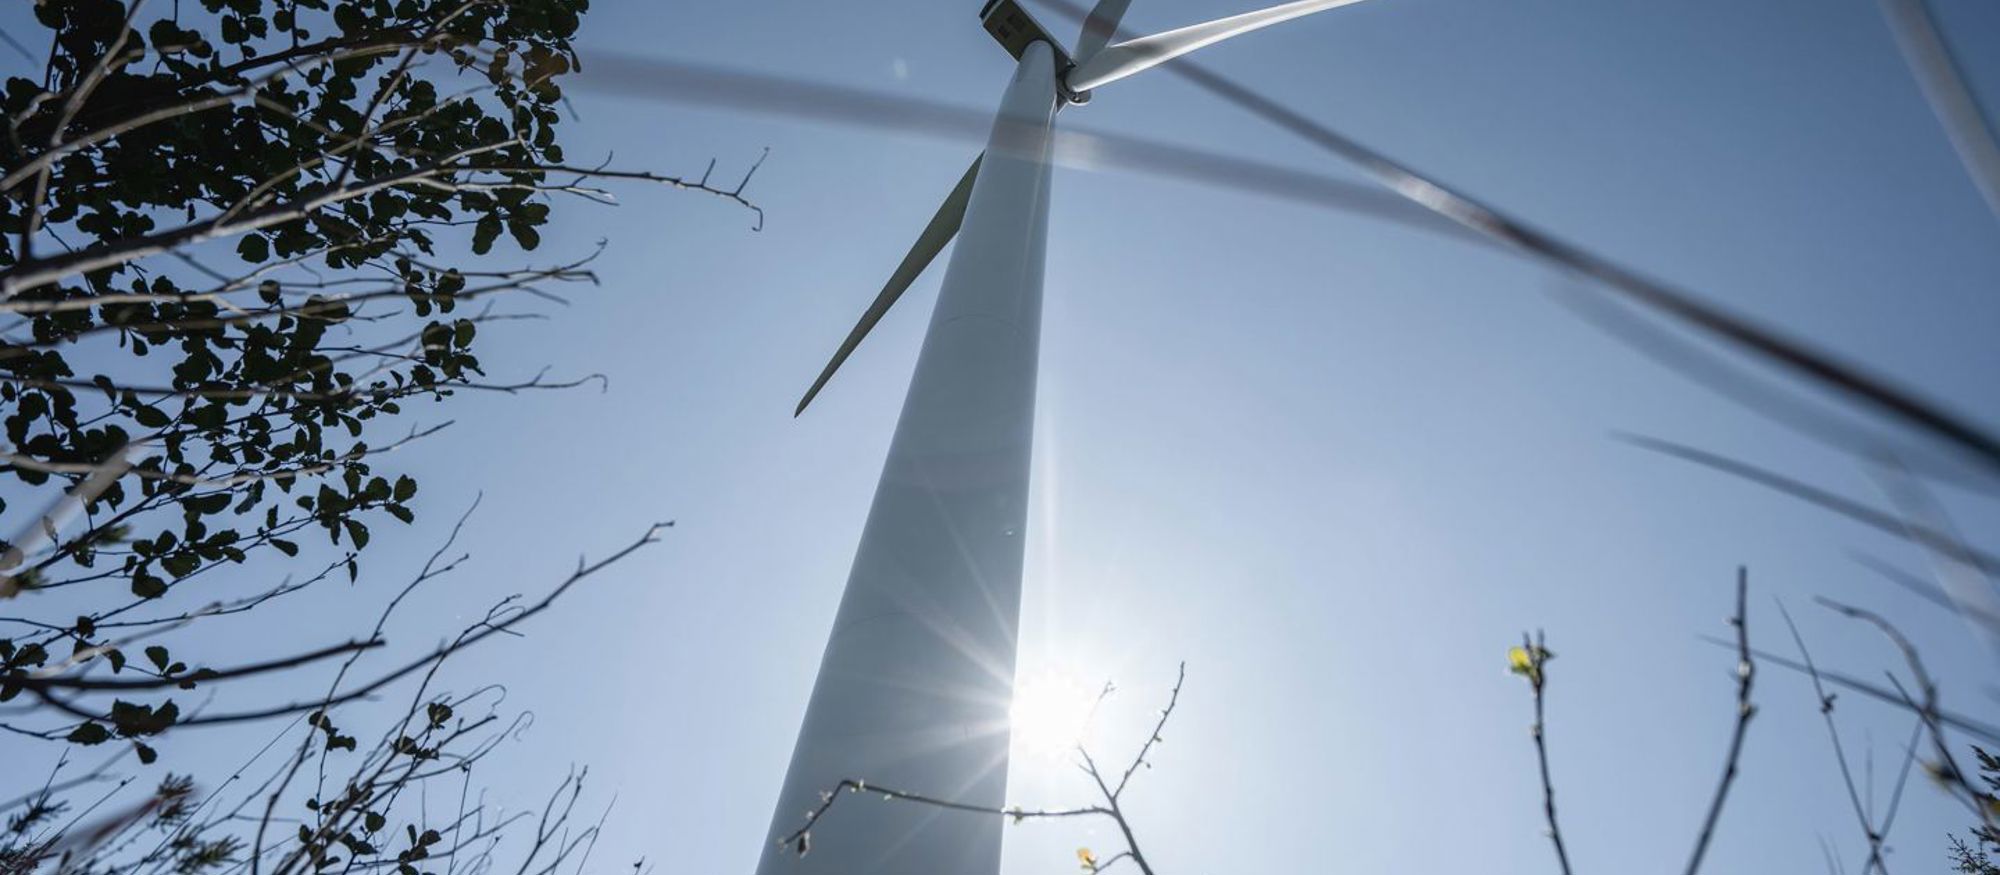 vindkraftverk hires16-scaled